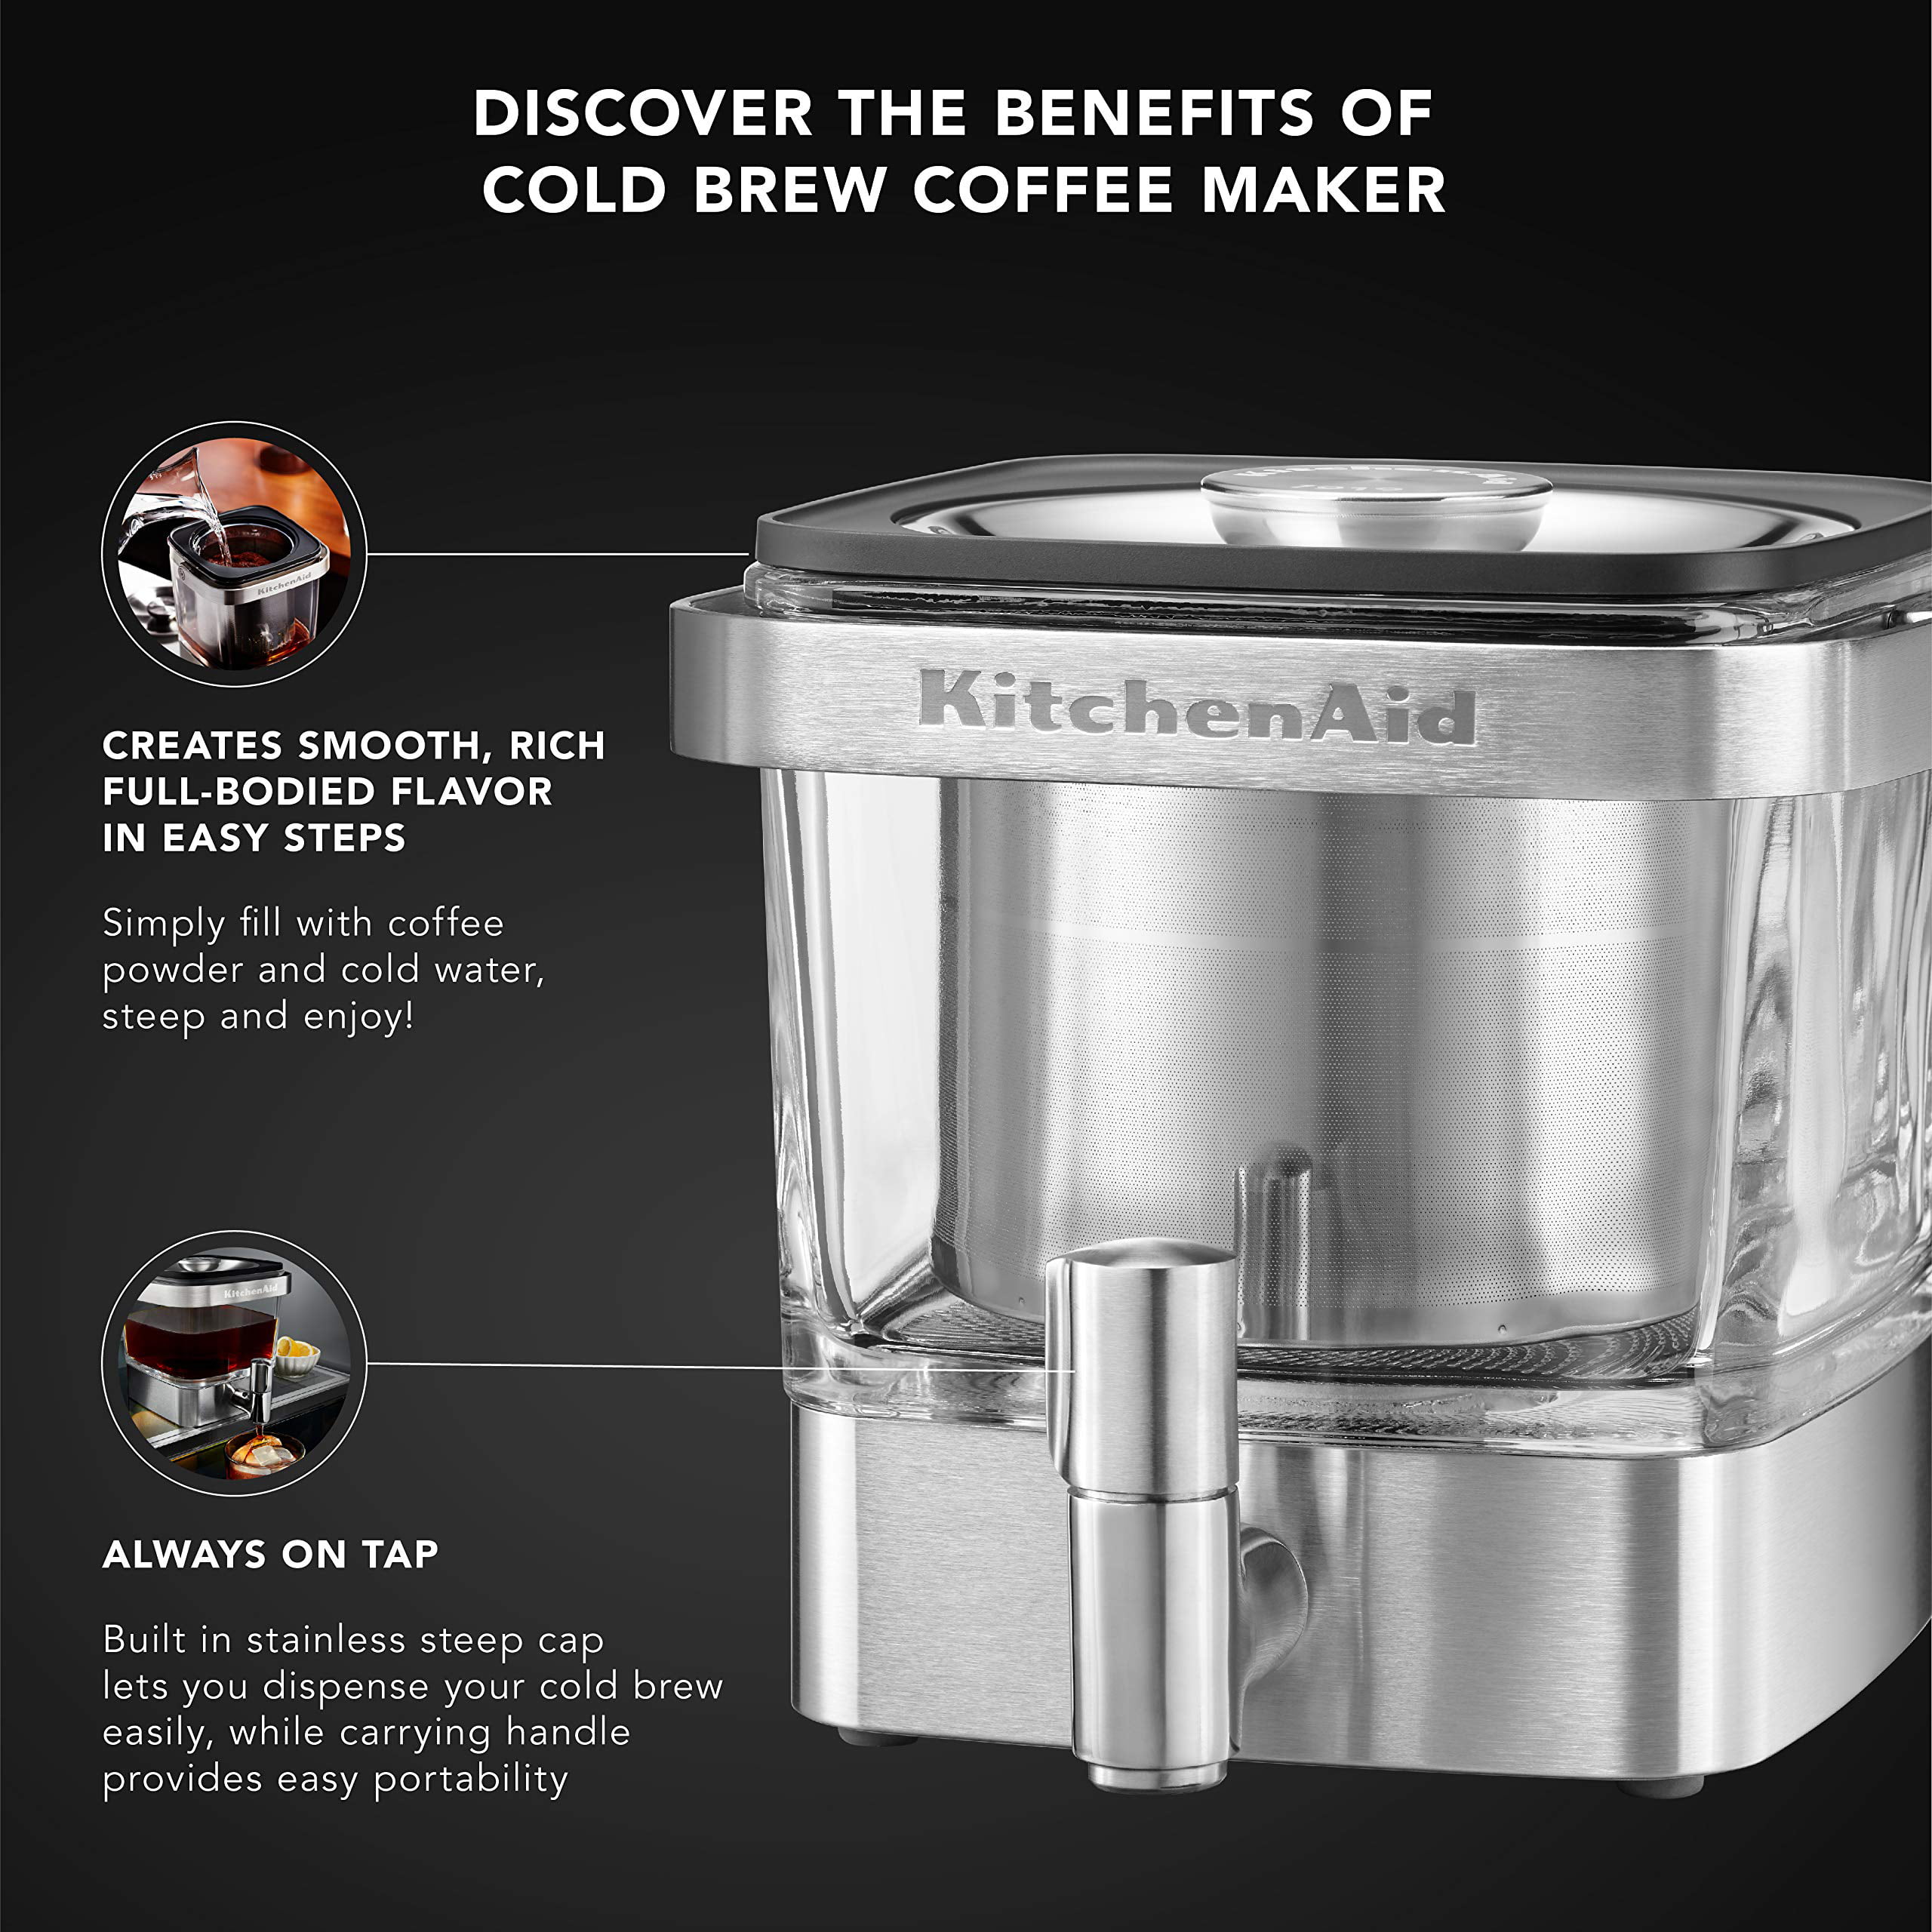 KitchenAid kcm4212sx Cold Brew Coffee Maker、つや消しステンレススチール